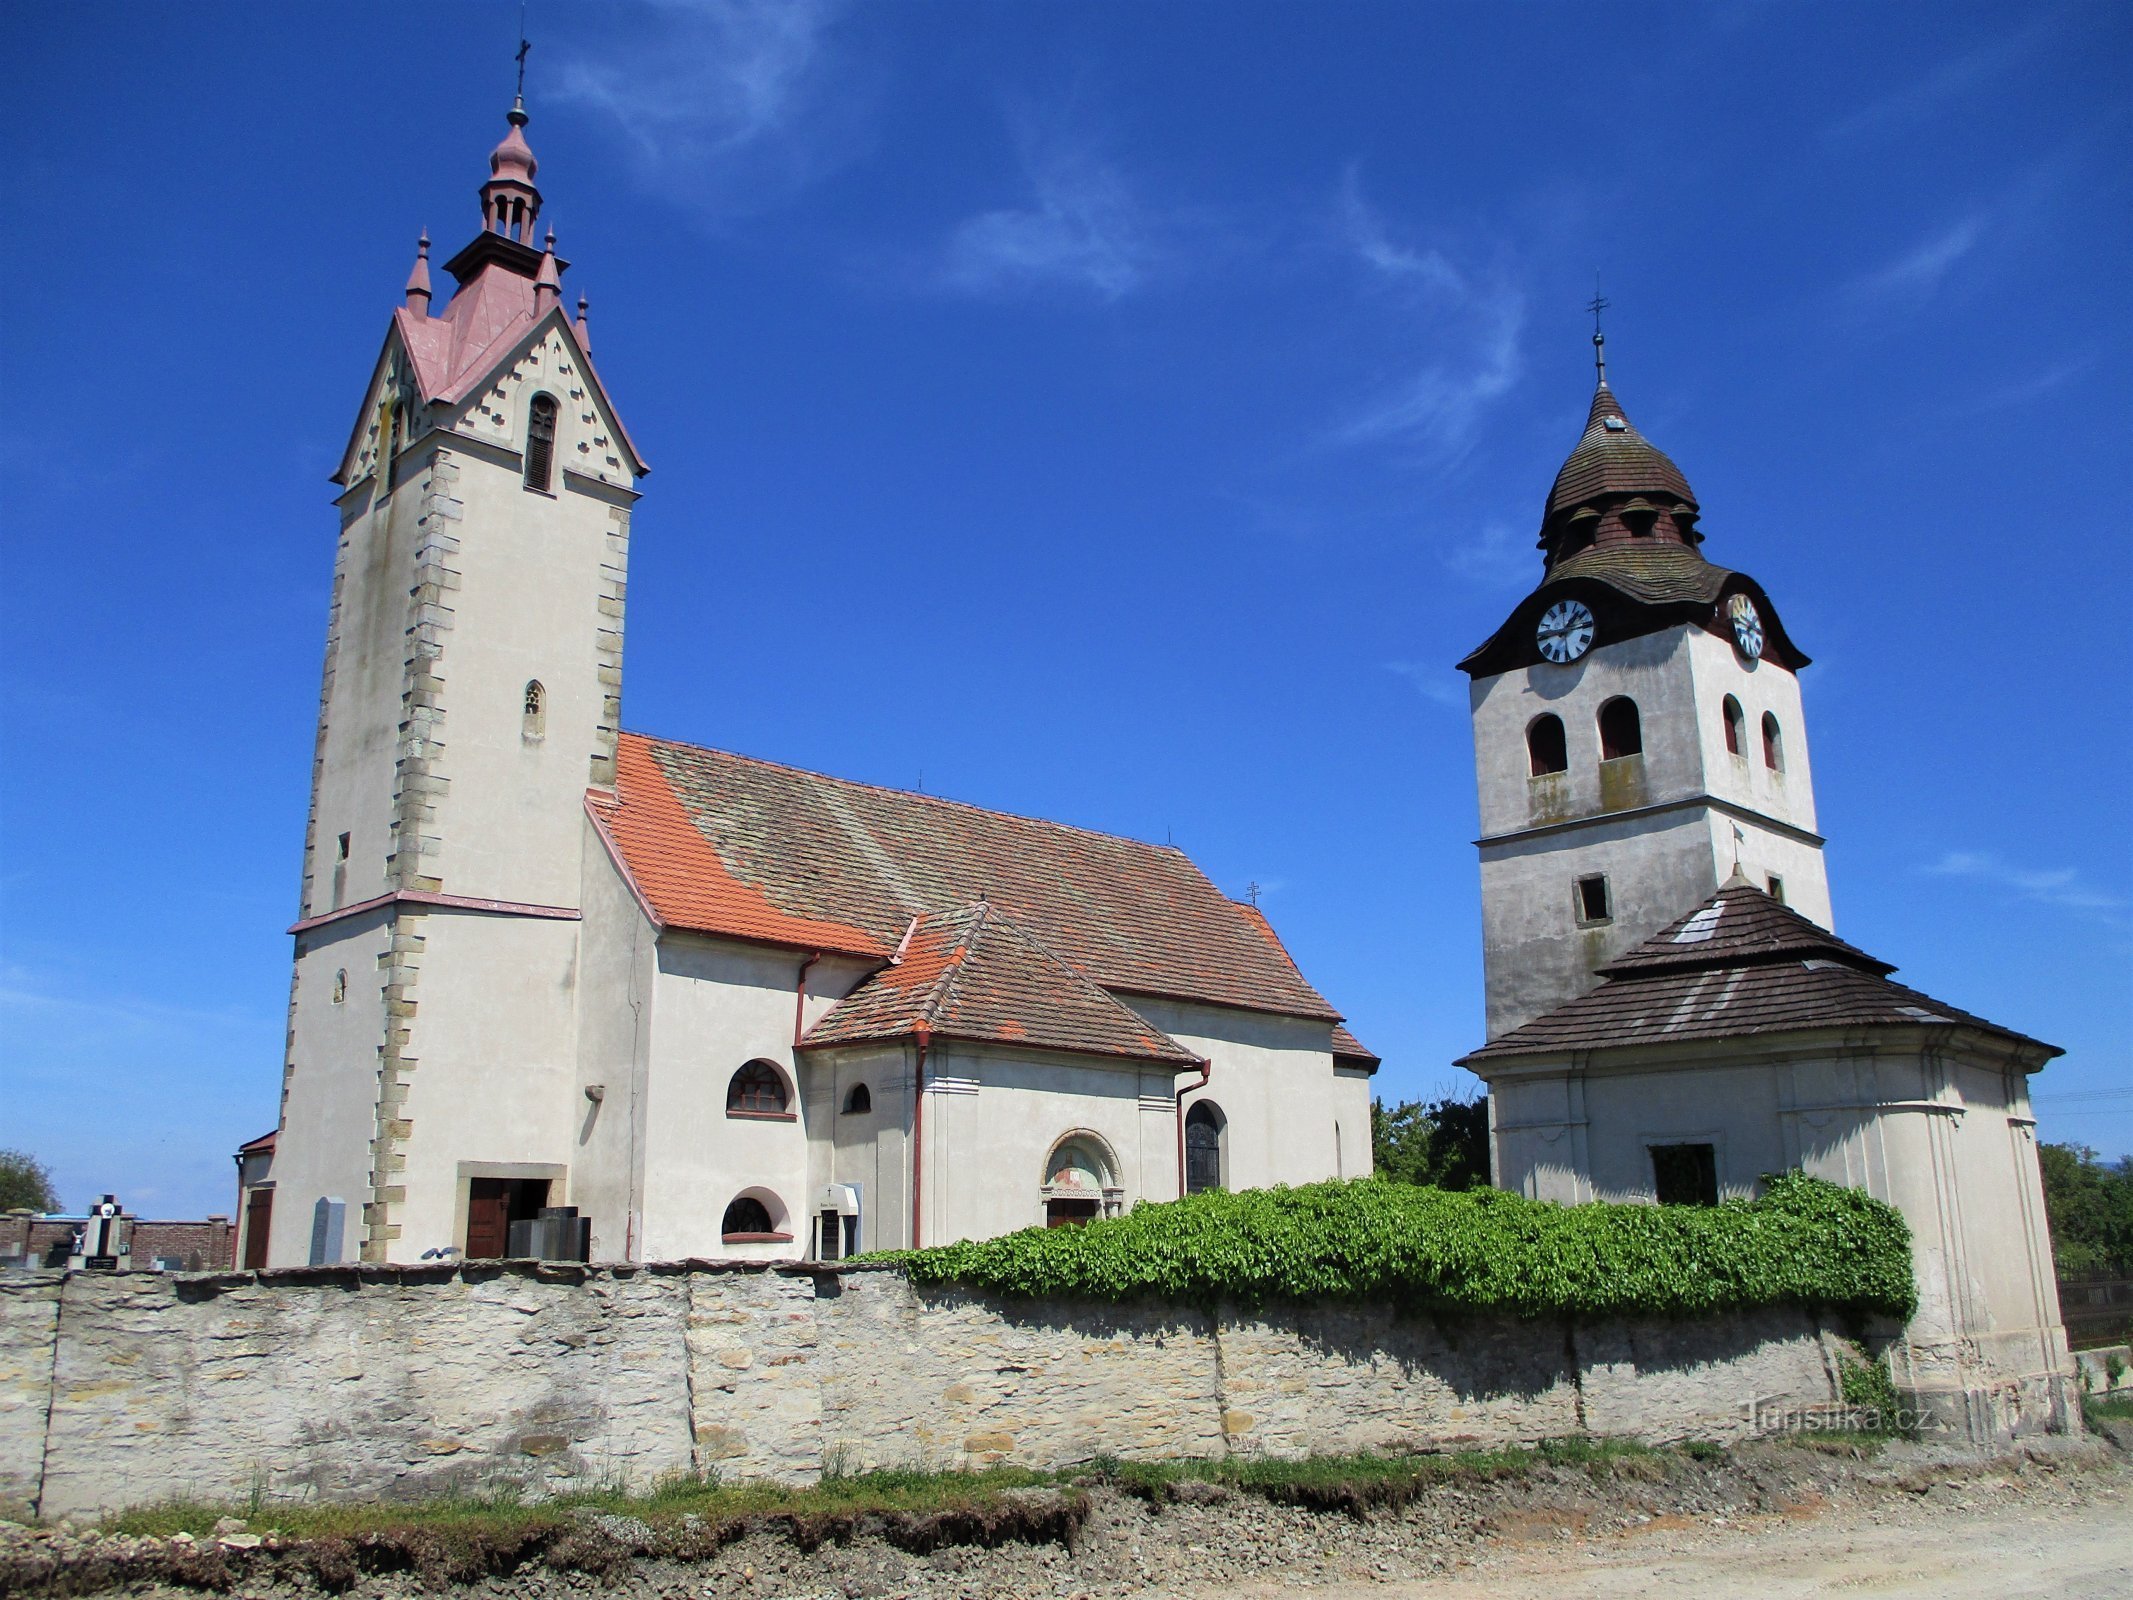 Church of St. Nicholas with the bell tower (Bohuslavice nad Metují, 18.5.2020/XNUMX/XNUMX)